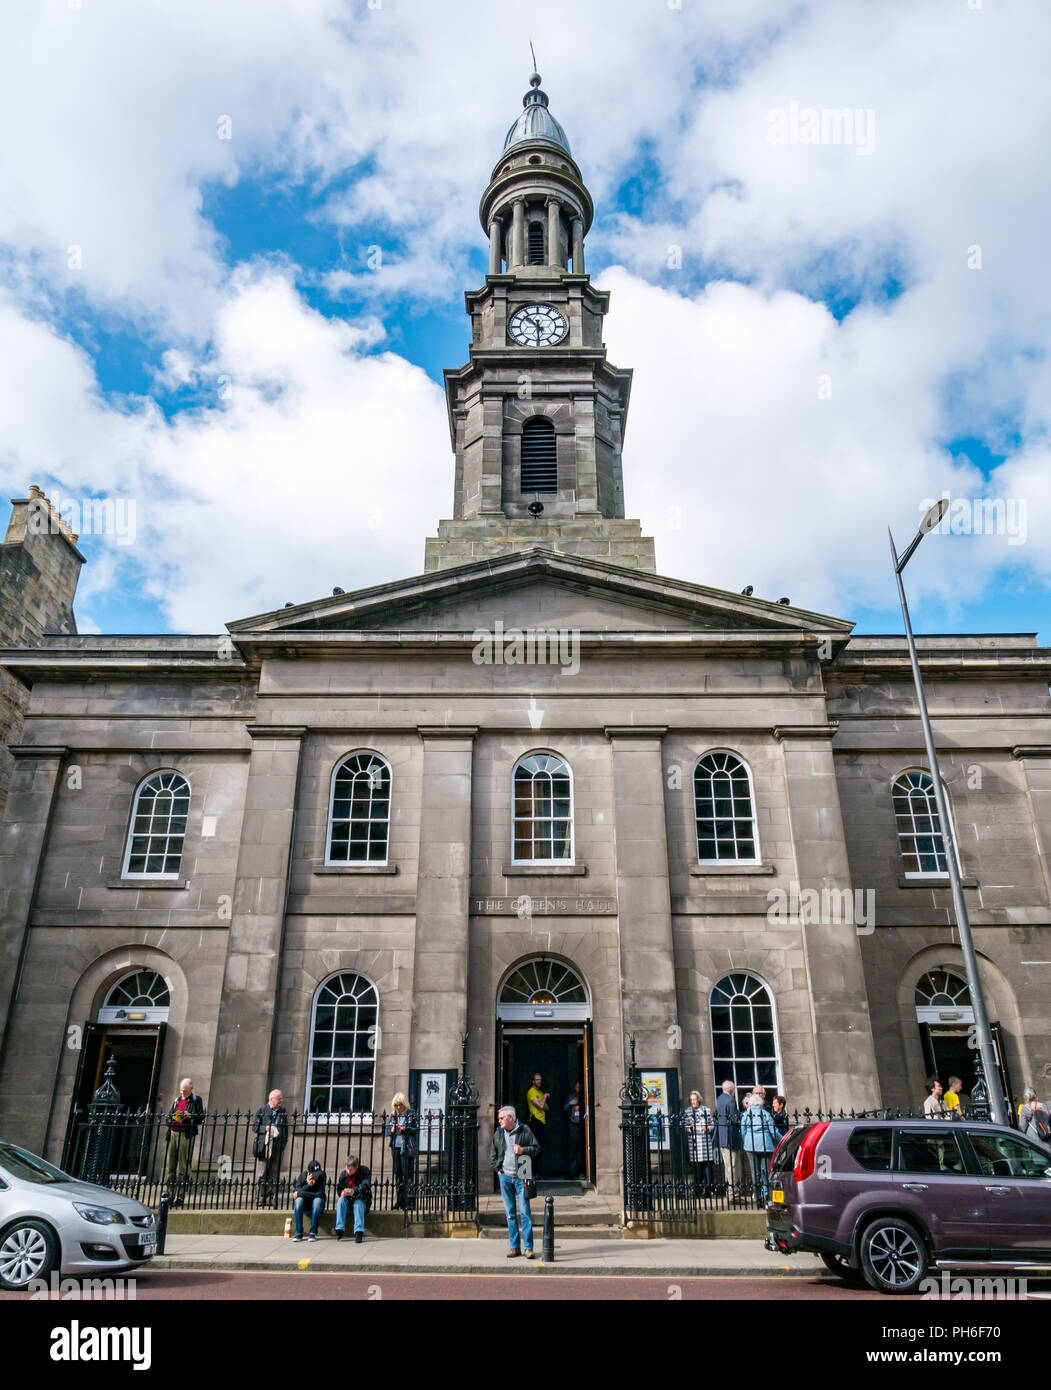 Georgian Queen's Hall, former church, now Edinburgh International Festival concert venue, Clerk Street, Edinburgh, Scotland, UK with people arriving Stock Photo